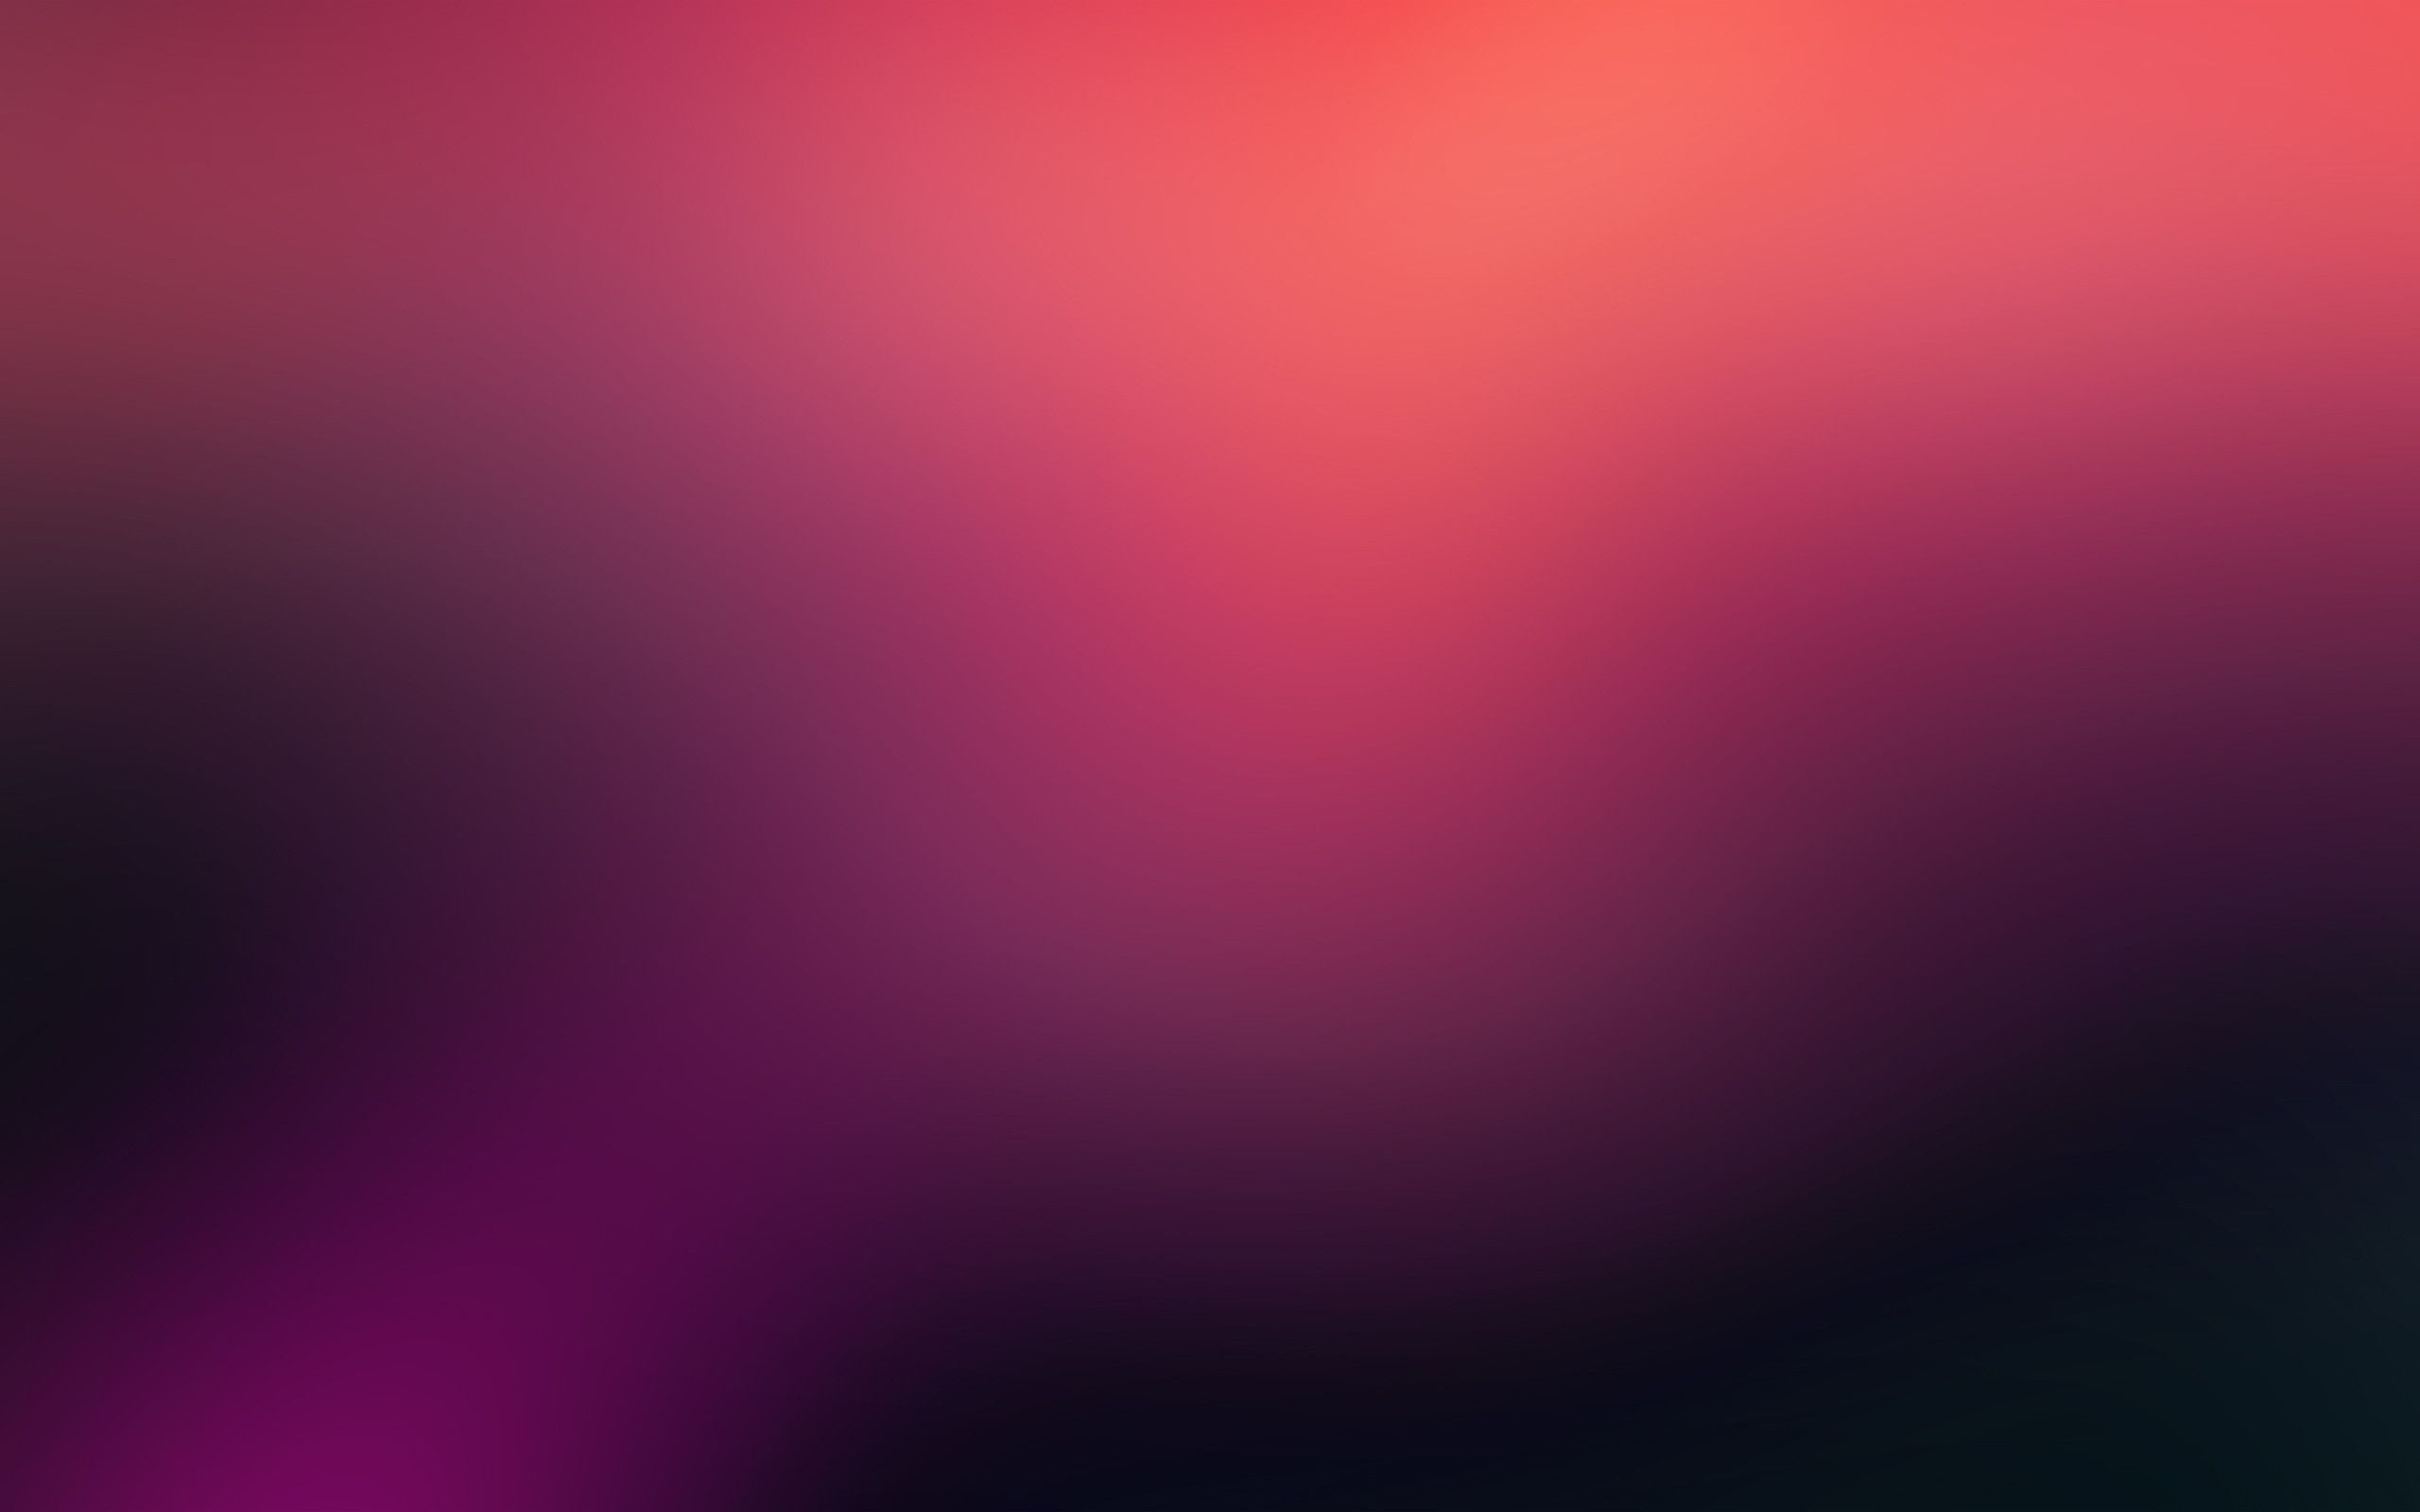 Warm Colors Wallpaper 34537 2560x1600px